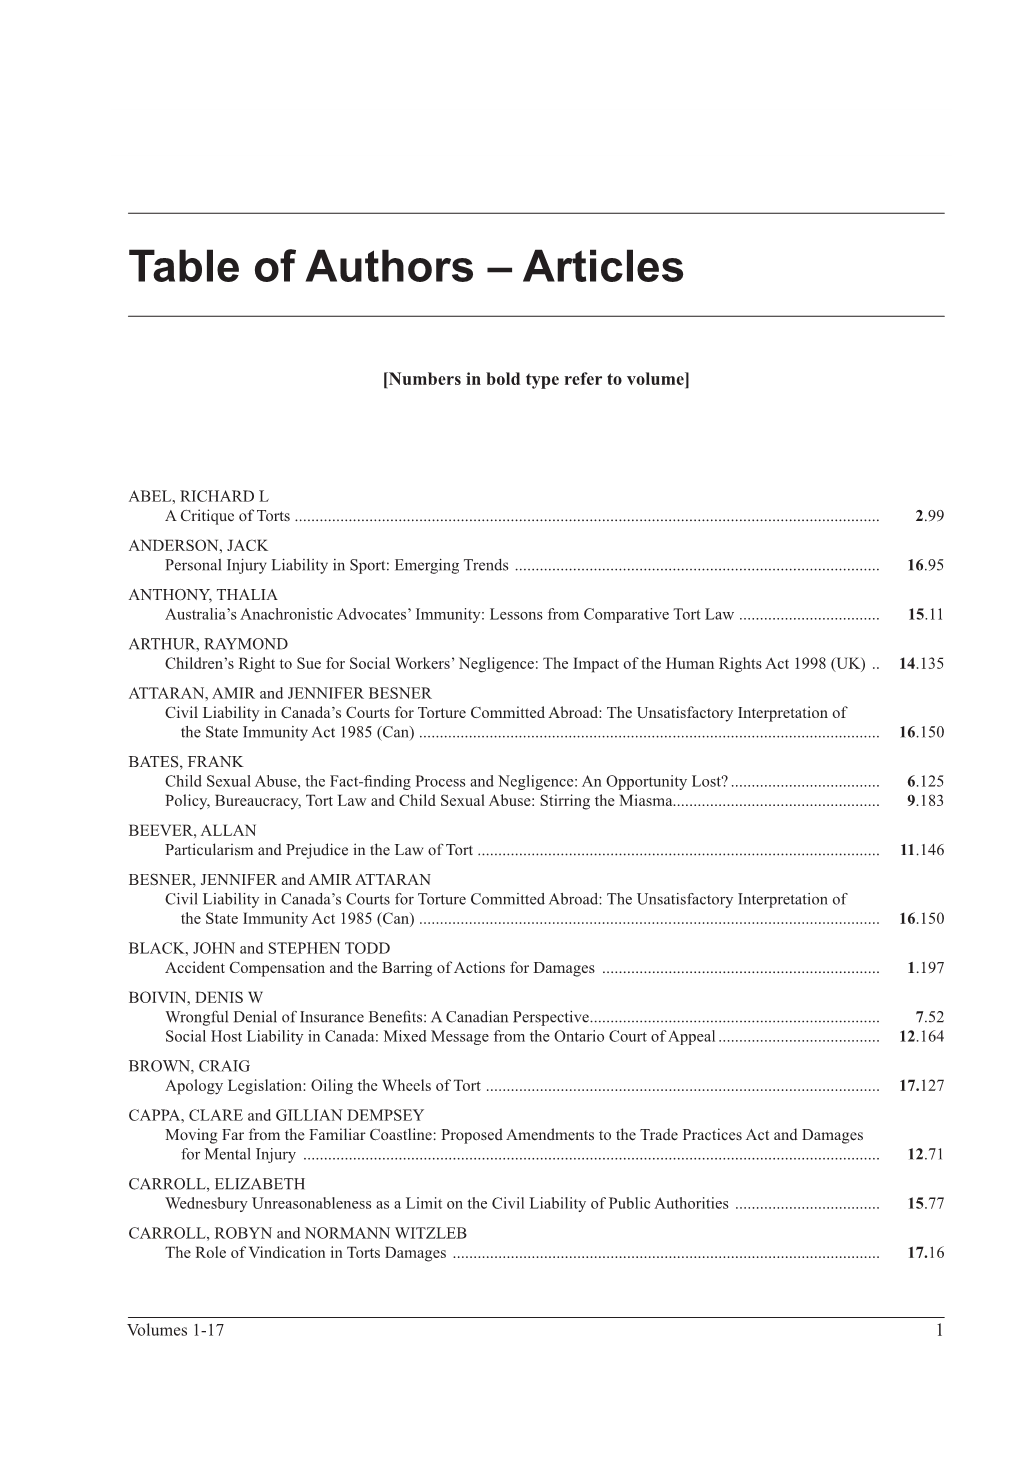 Tort L Rev Table of Authors Vols 1-17